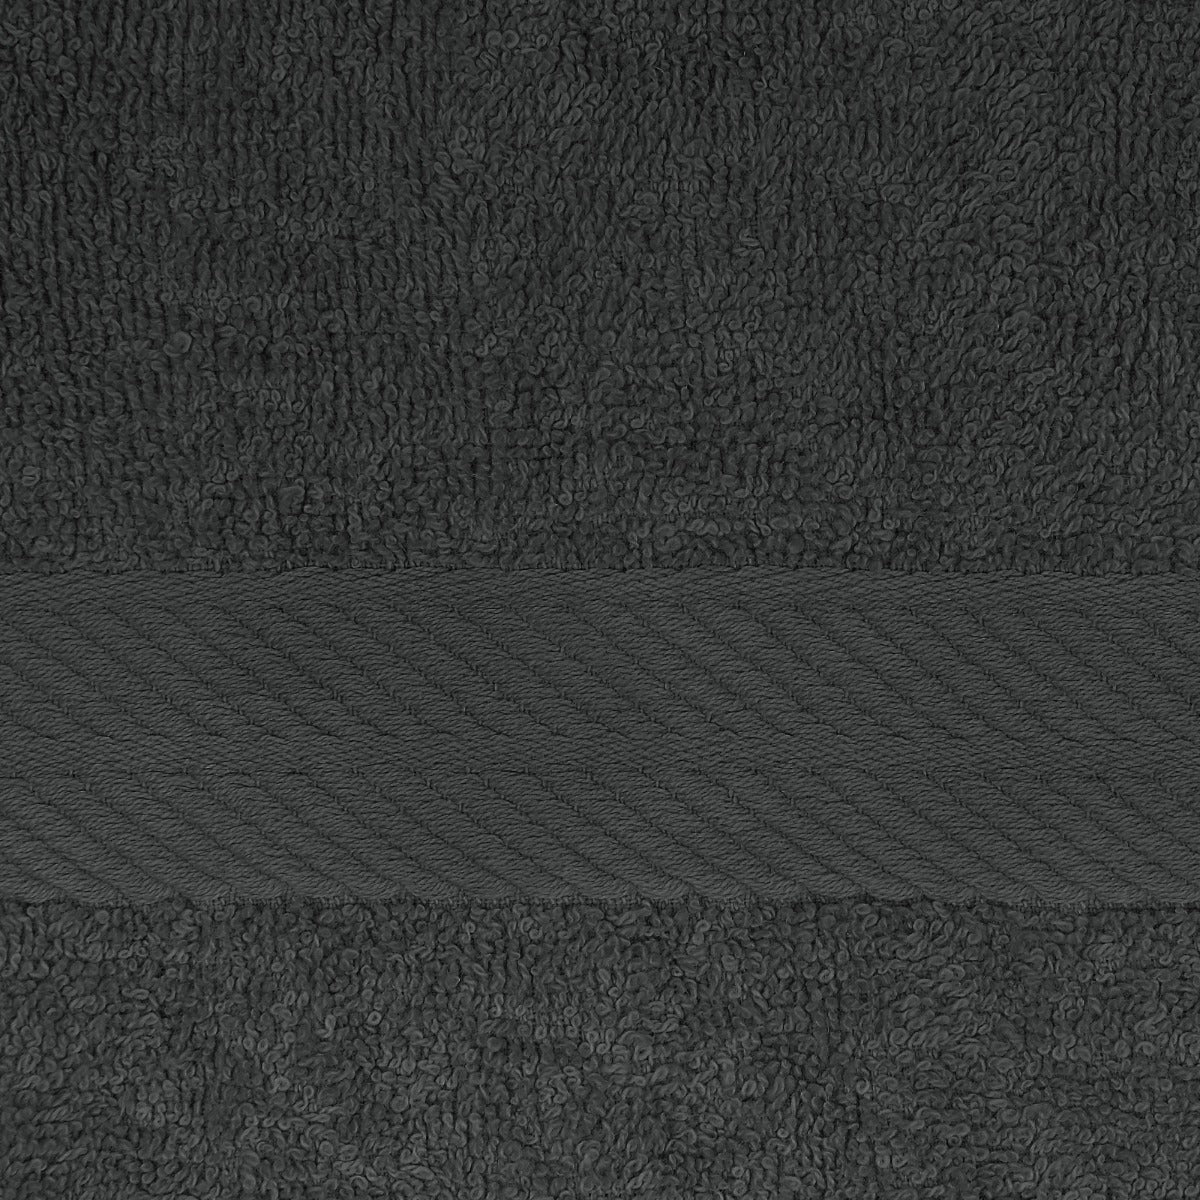 Royal Comfort 4 Piece Cotton Bamboo Towel Set 450GSM Luxurious Absorbent Plush Granite Deals499